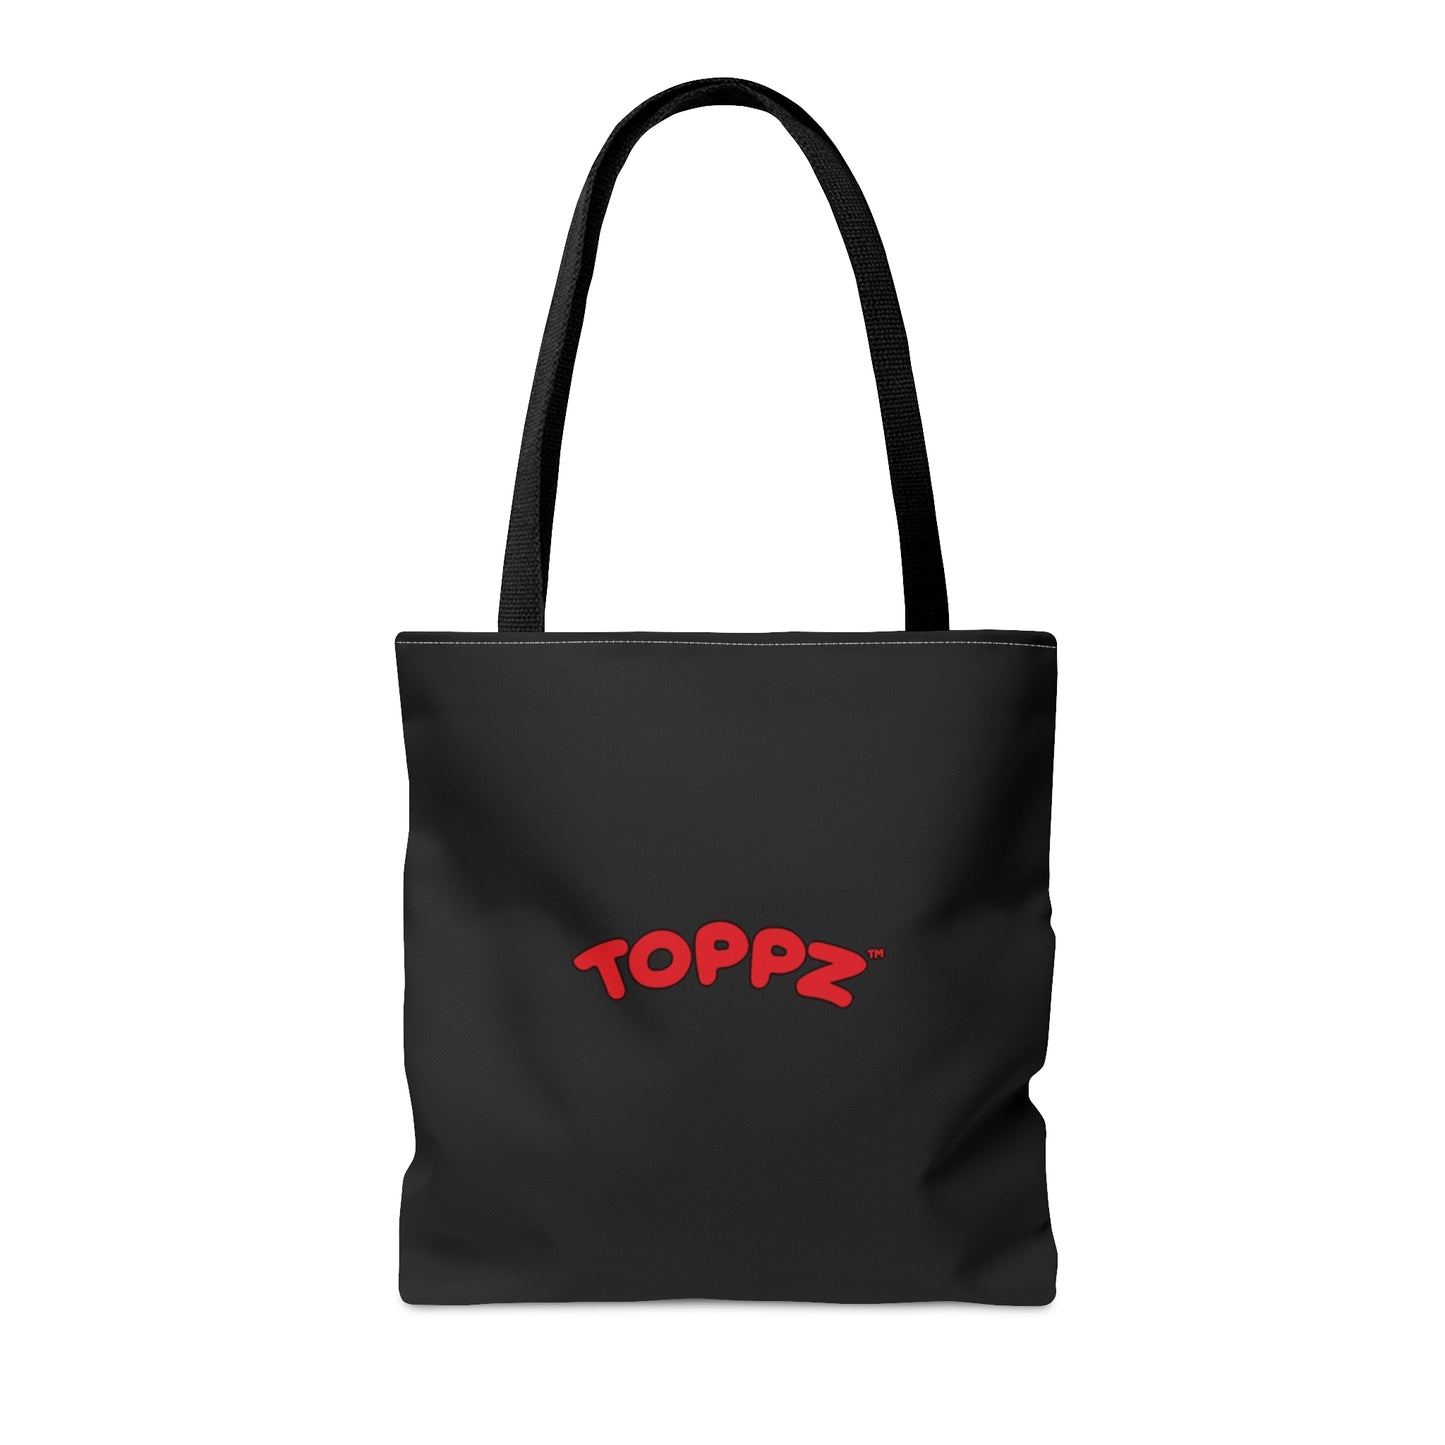 Toppz Tote Bag